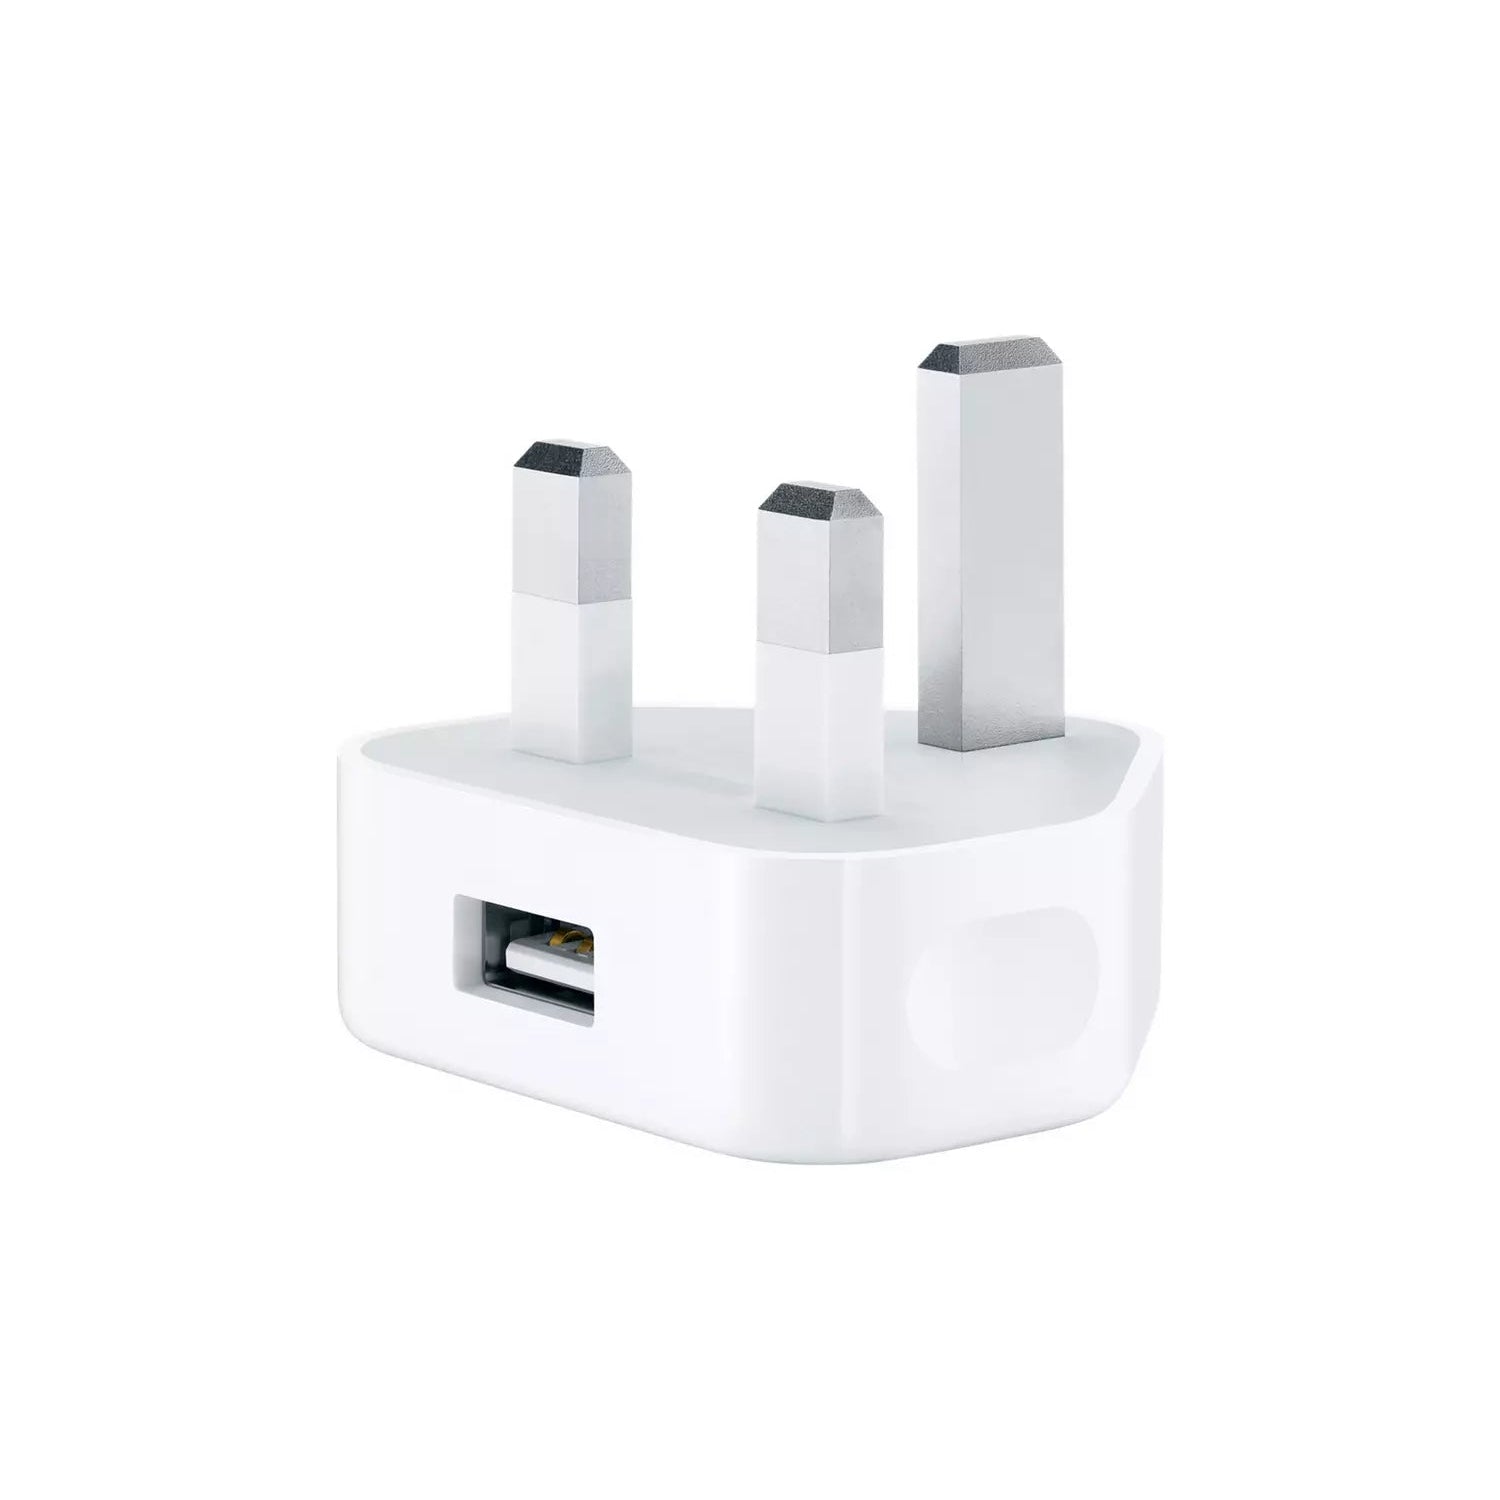 Apple 5W USB Power Adapter MGN43B/A - Refurbished Pristine